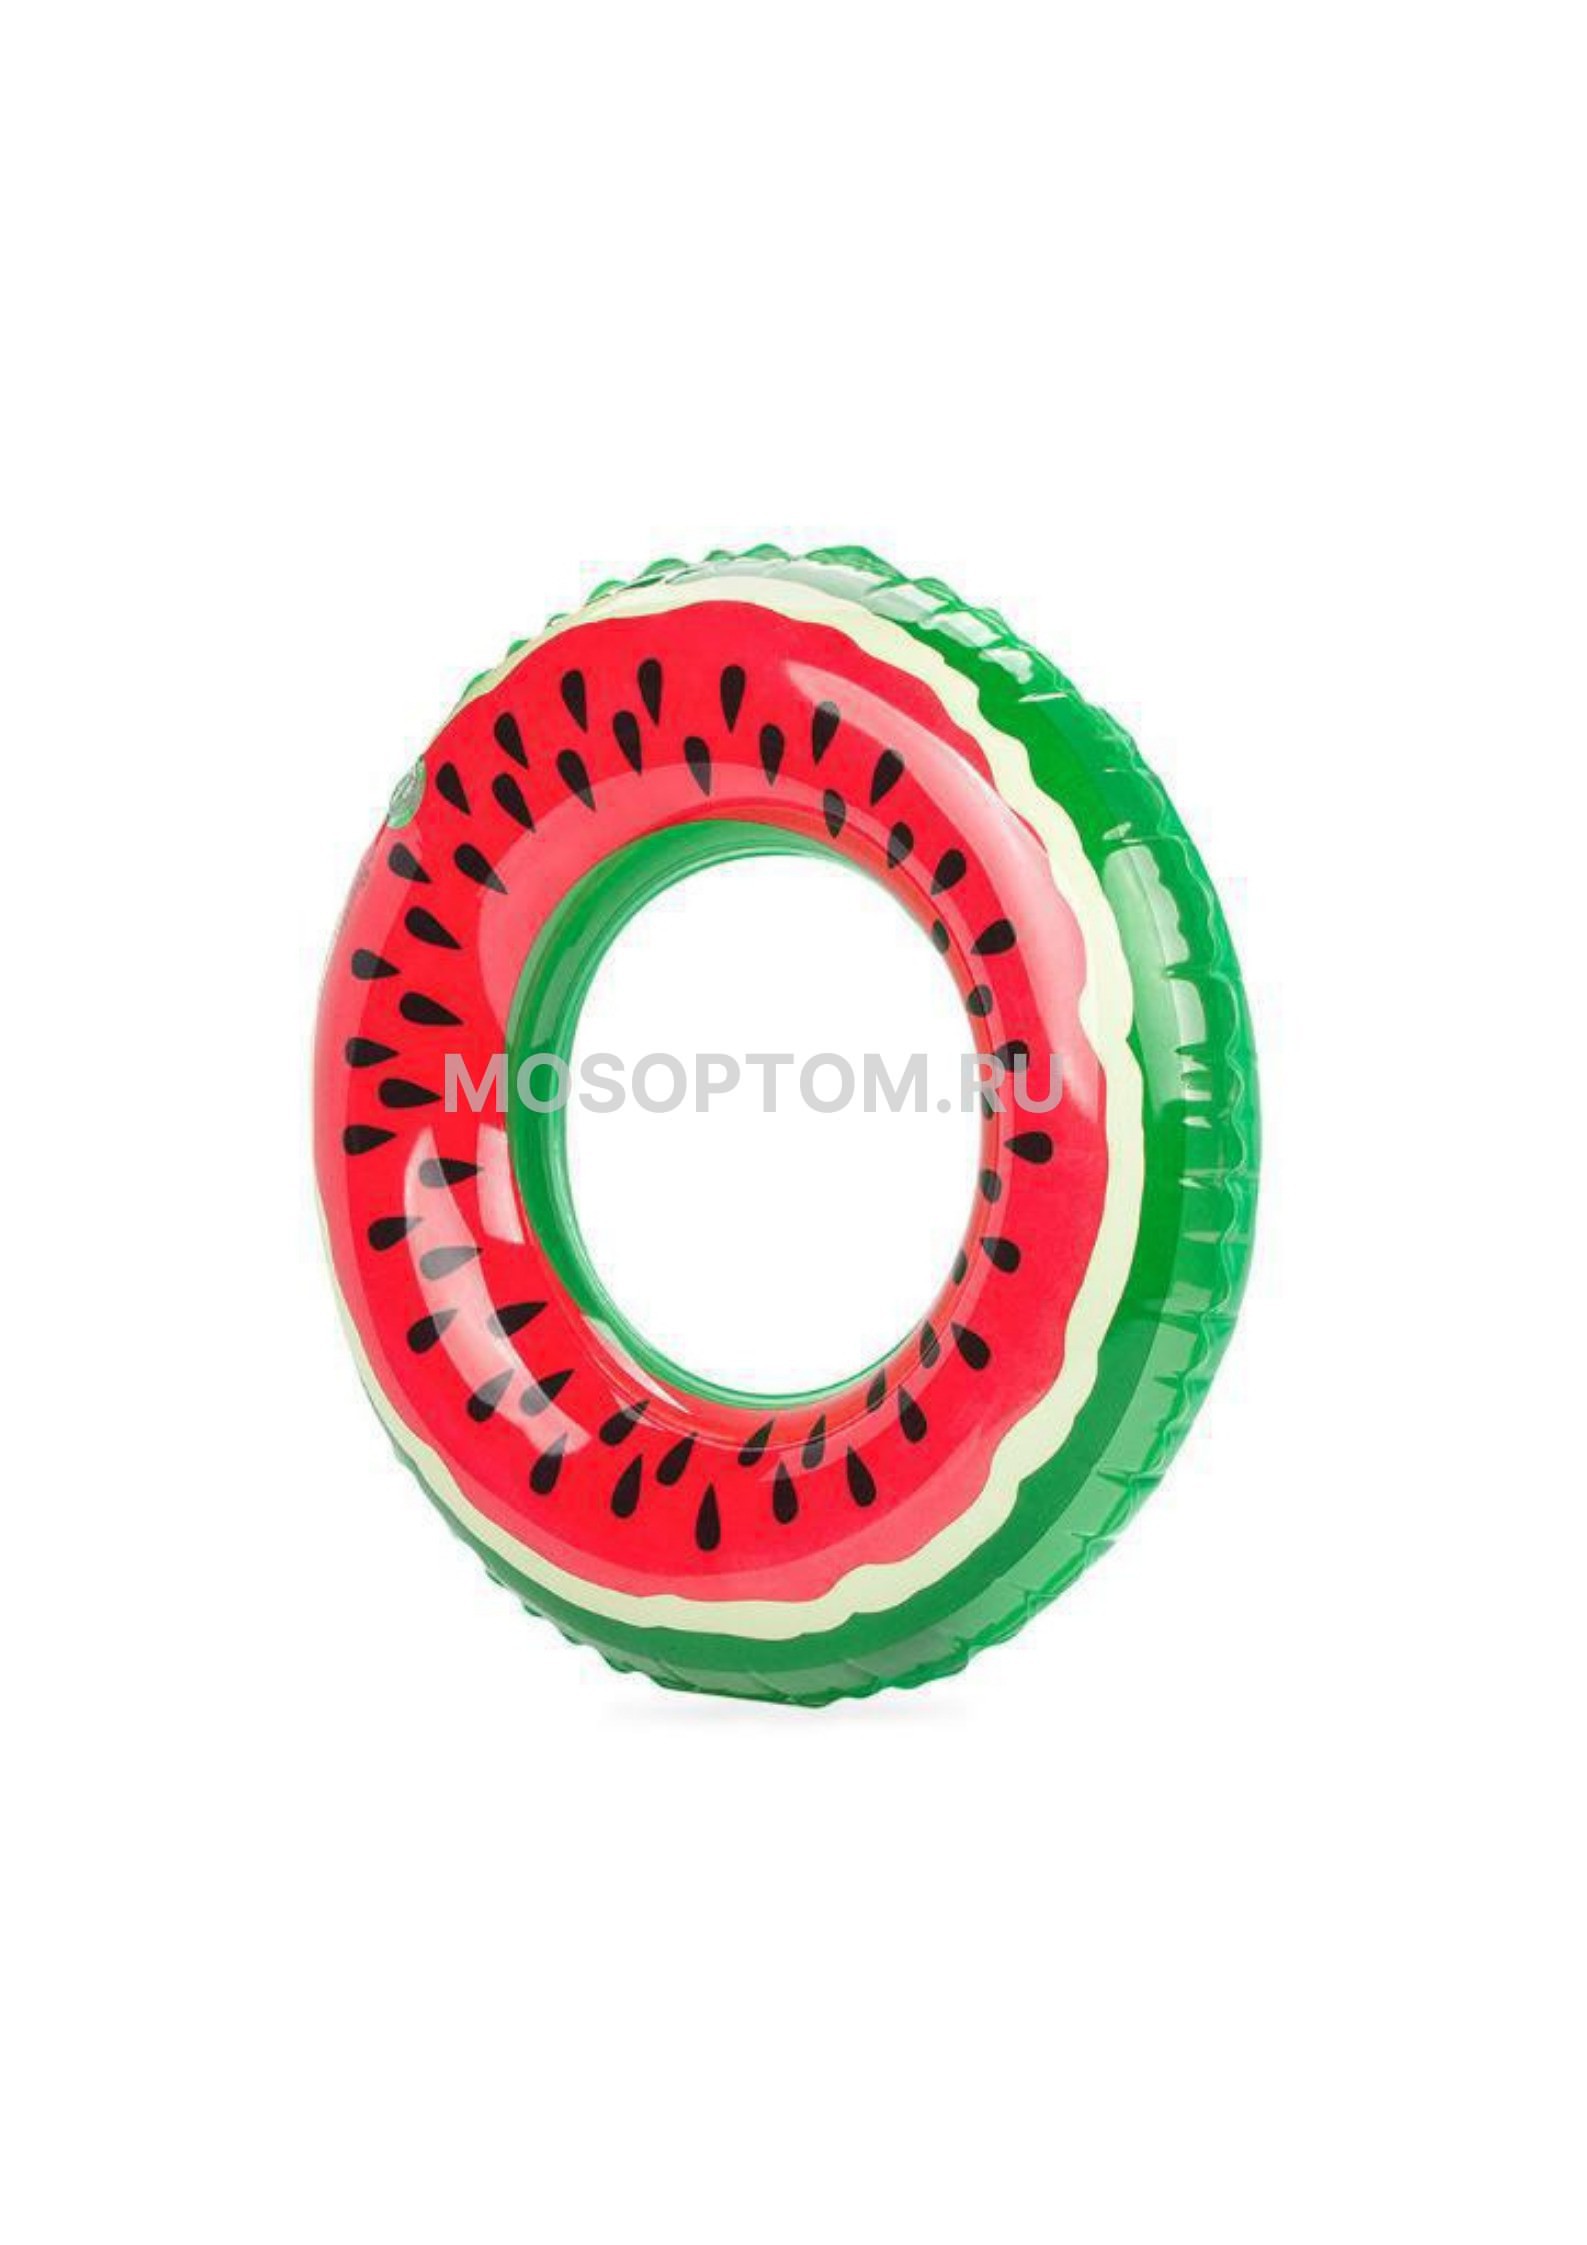 Надувной круг Арбуз Watermelon 90см оптом - Фото №2